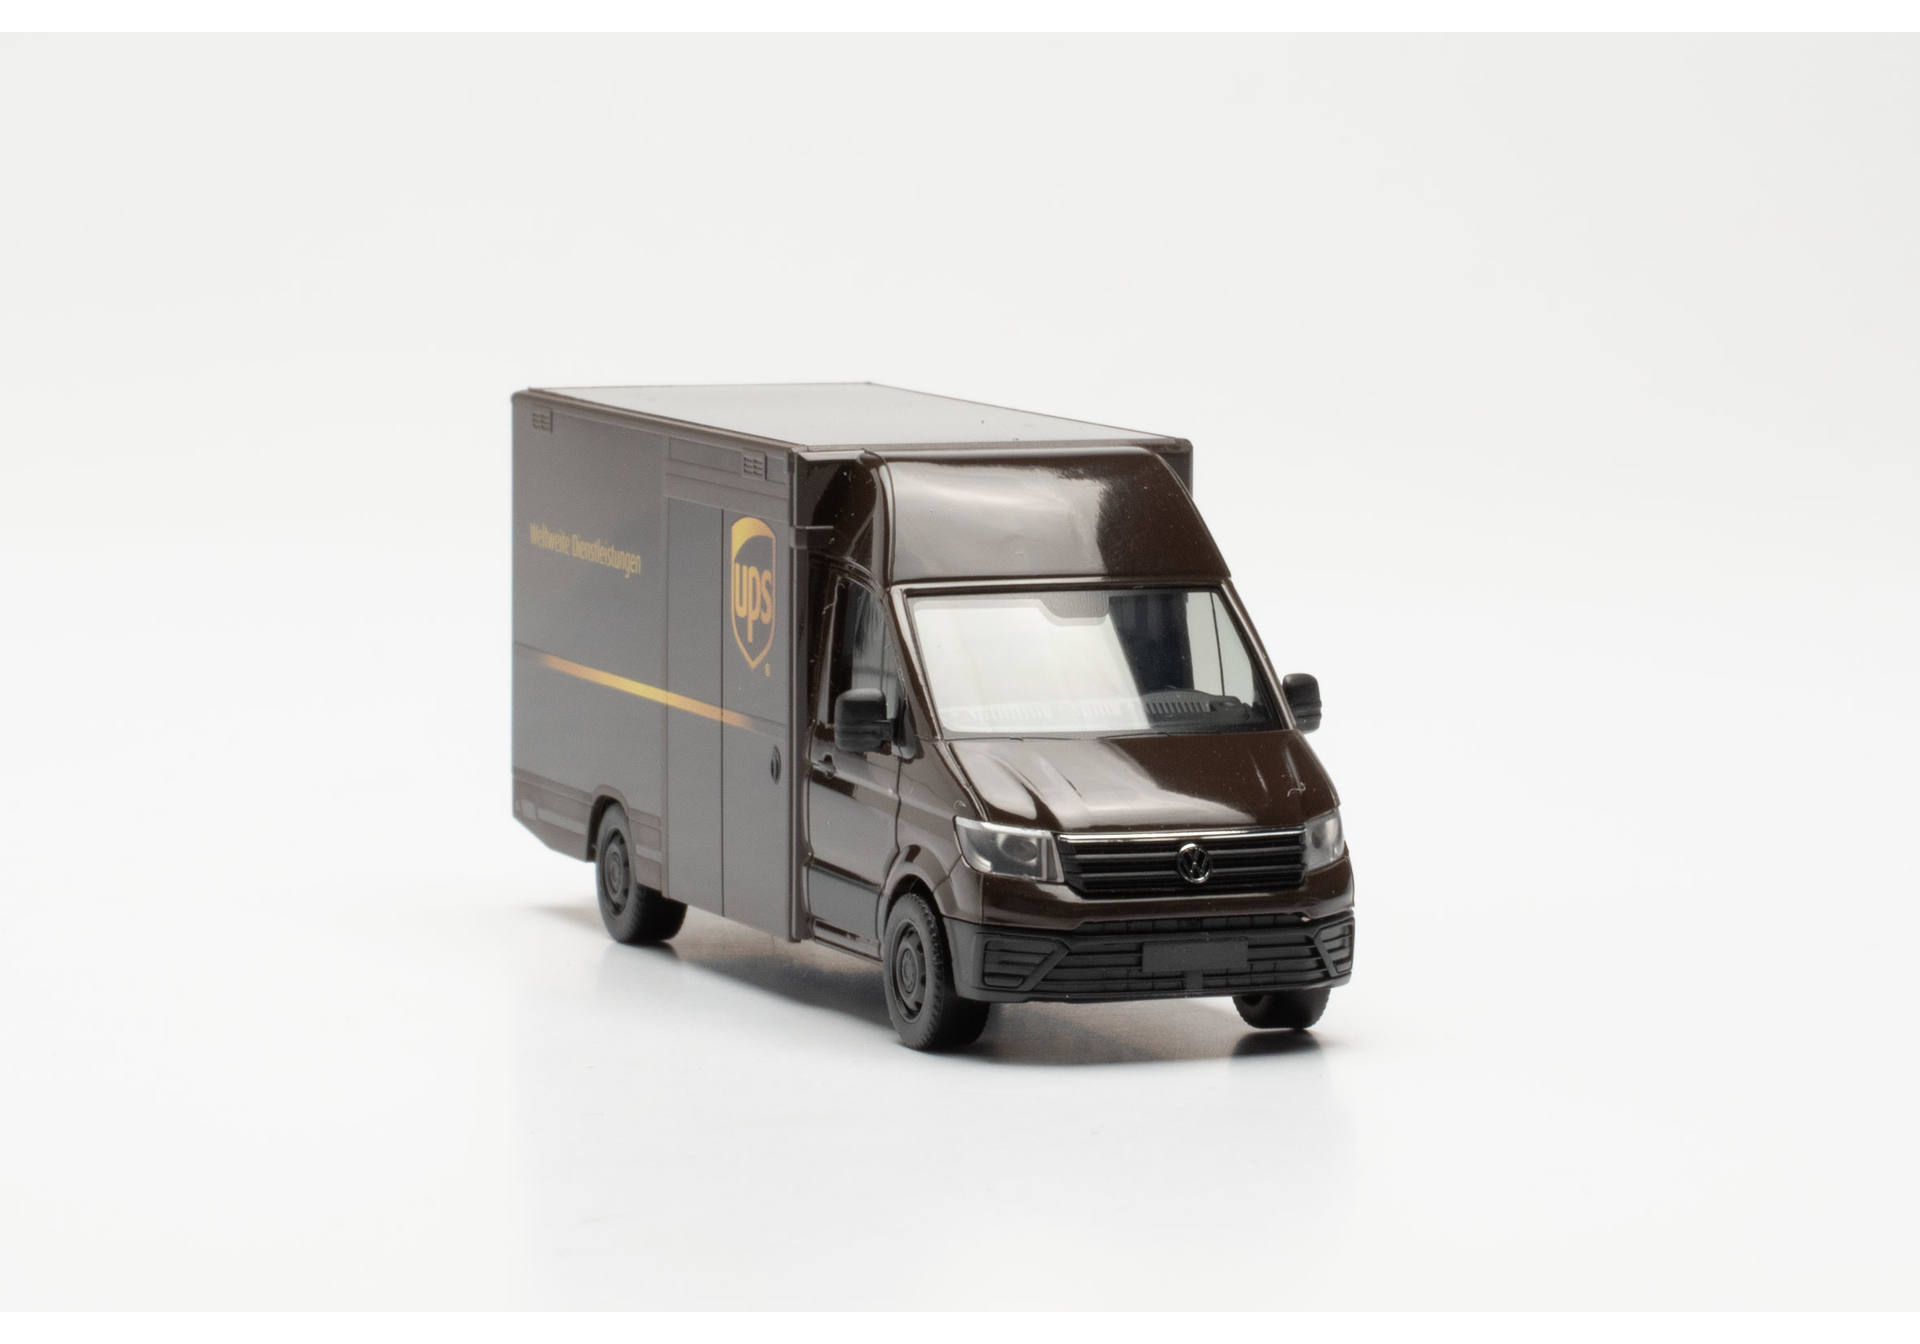 Volkswagen (VW) Crafter package distribution vehicle "UPS"